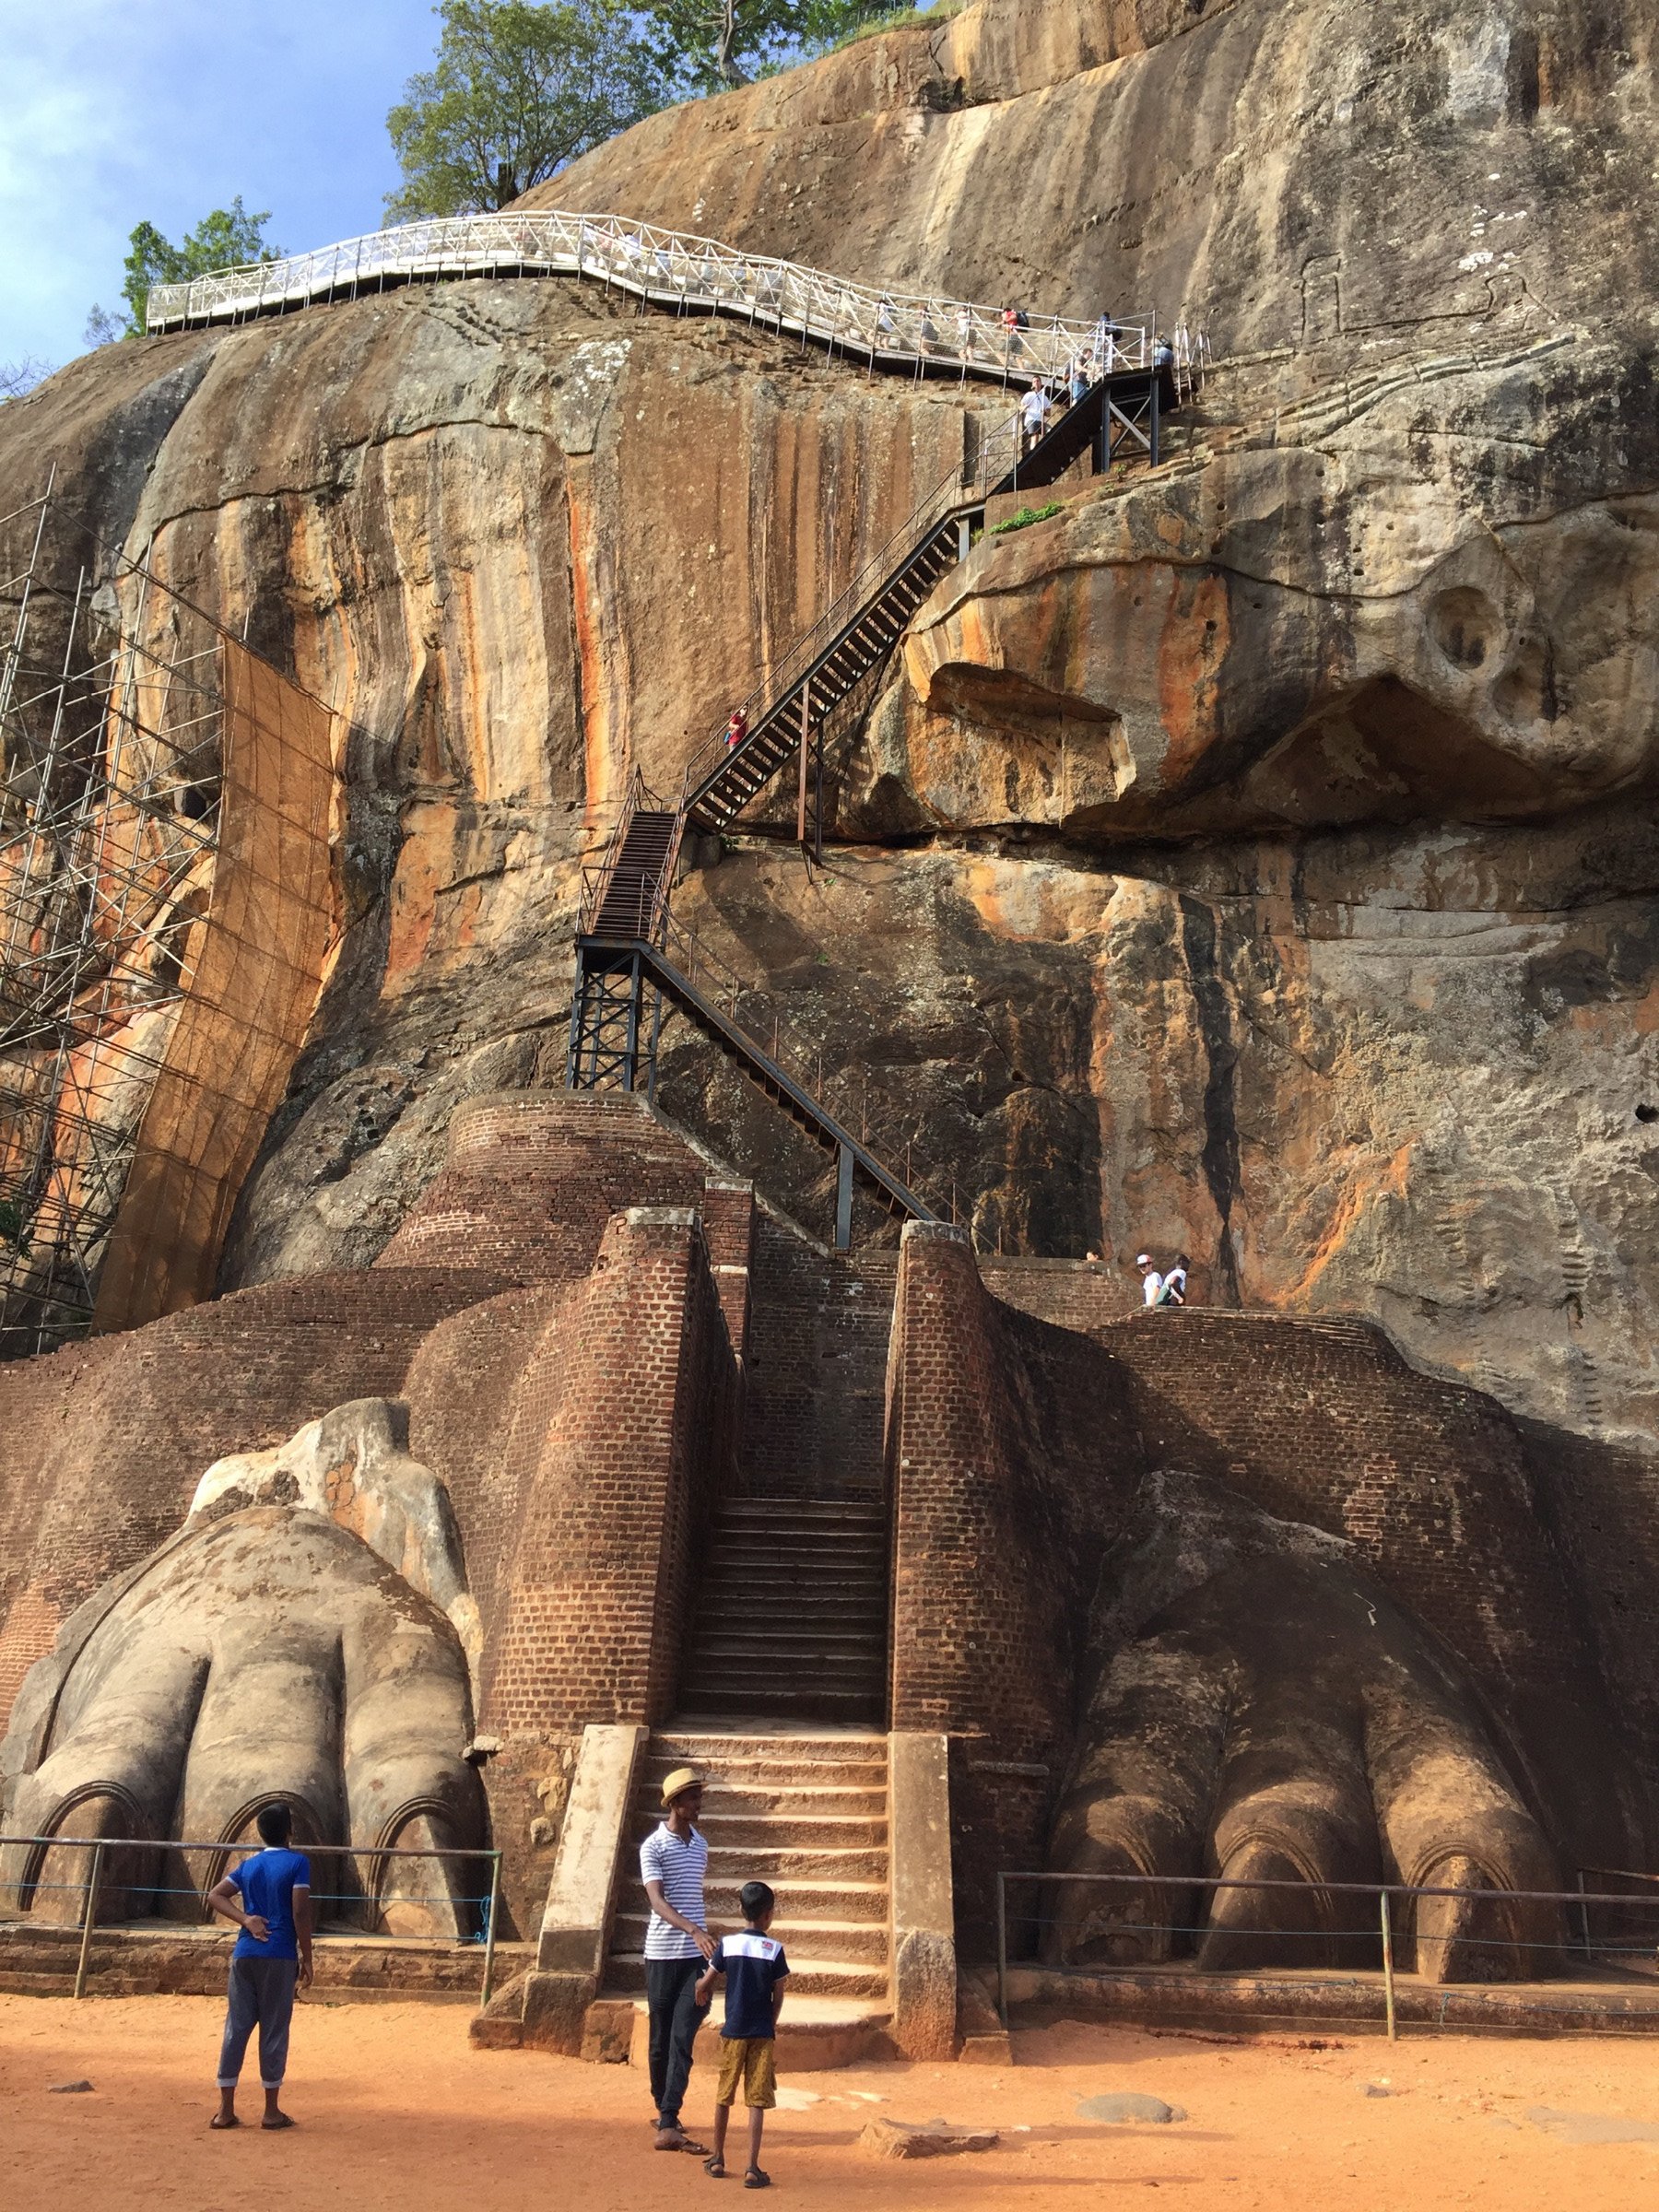 Lions paws and stairs at Sigiriya Rock | Photo